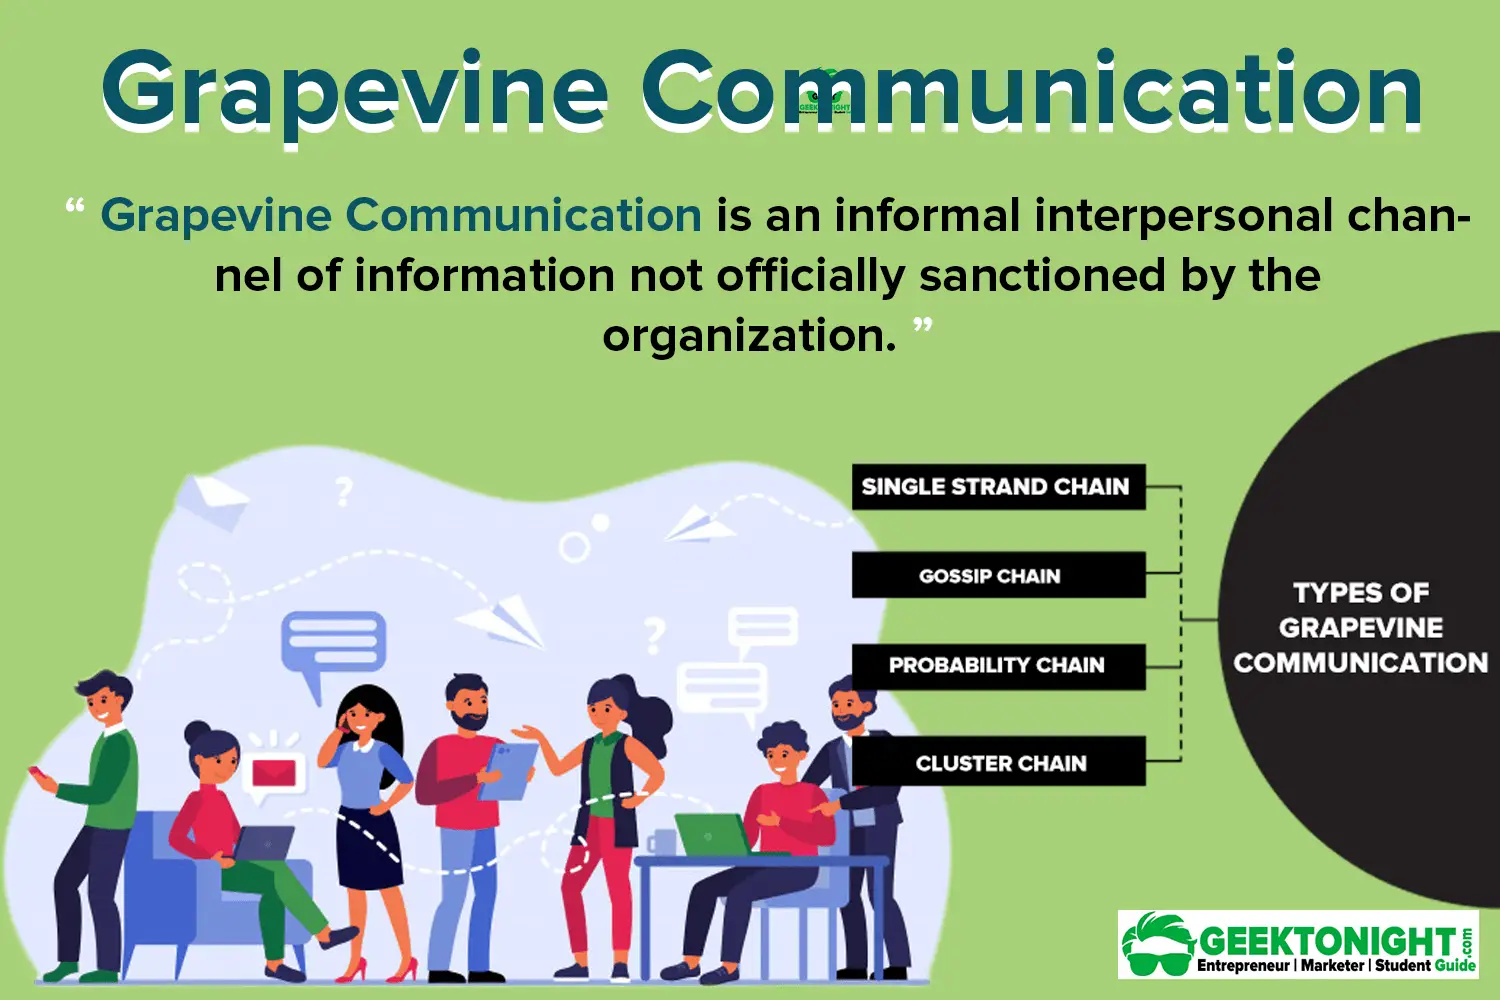 Grapevine Communication